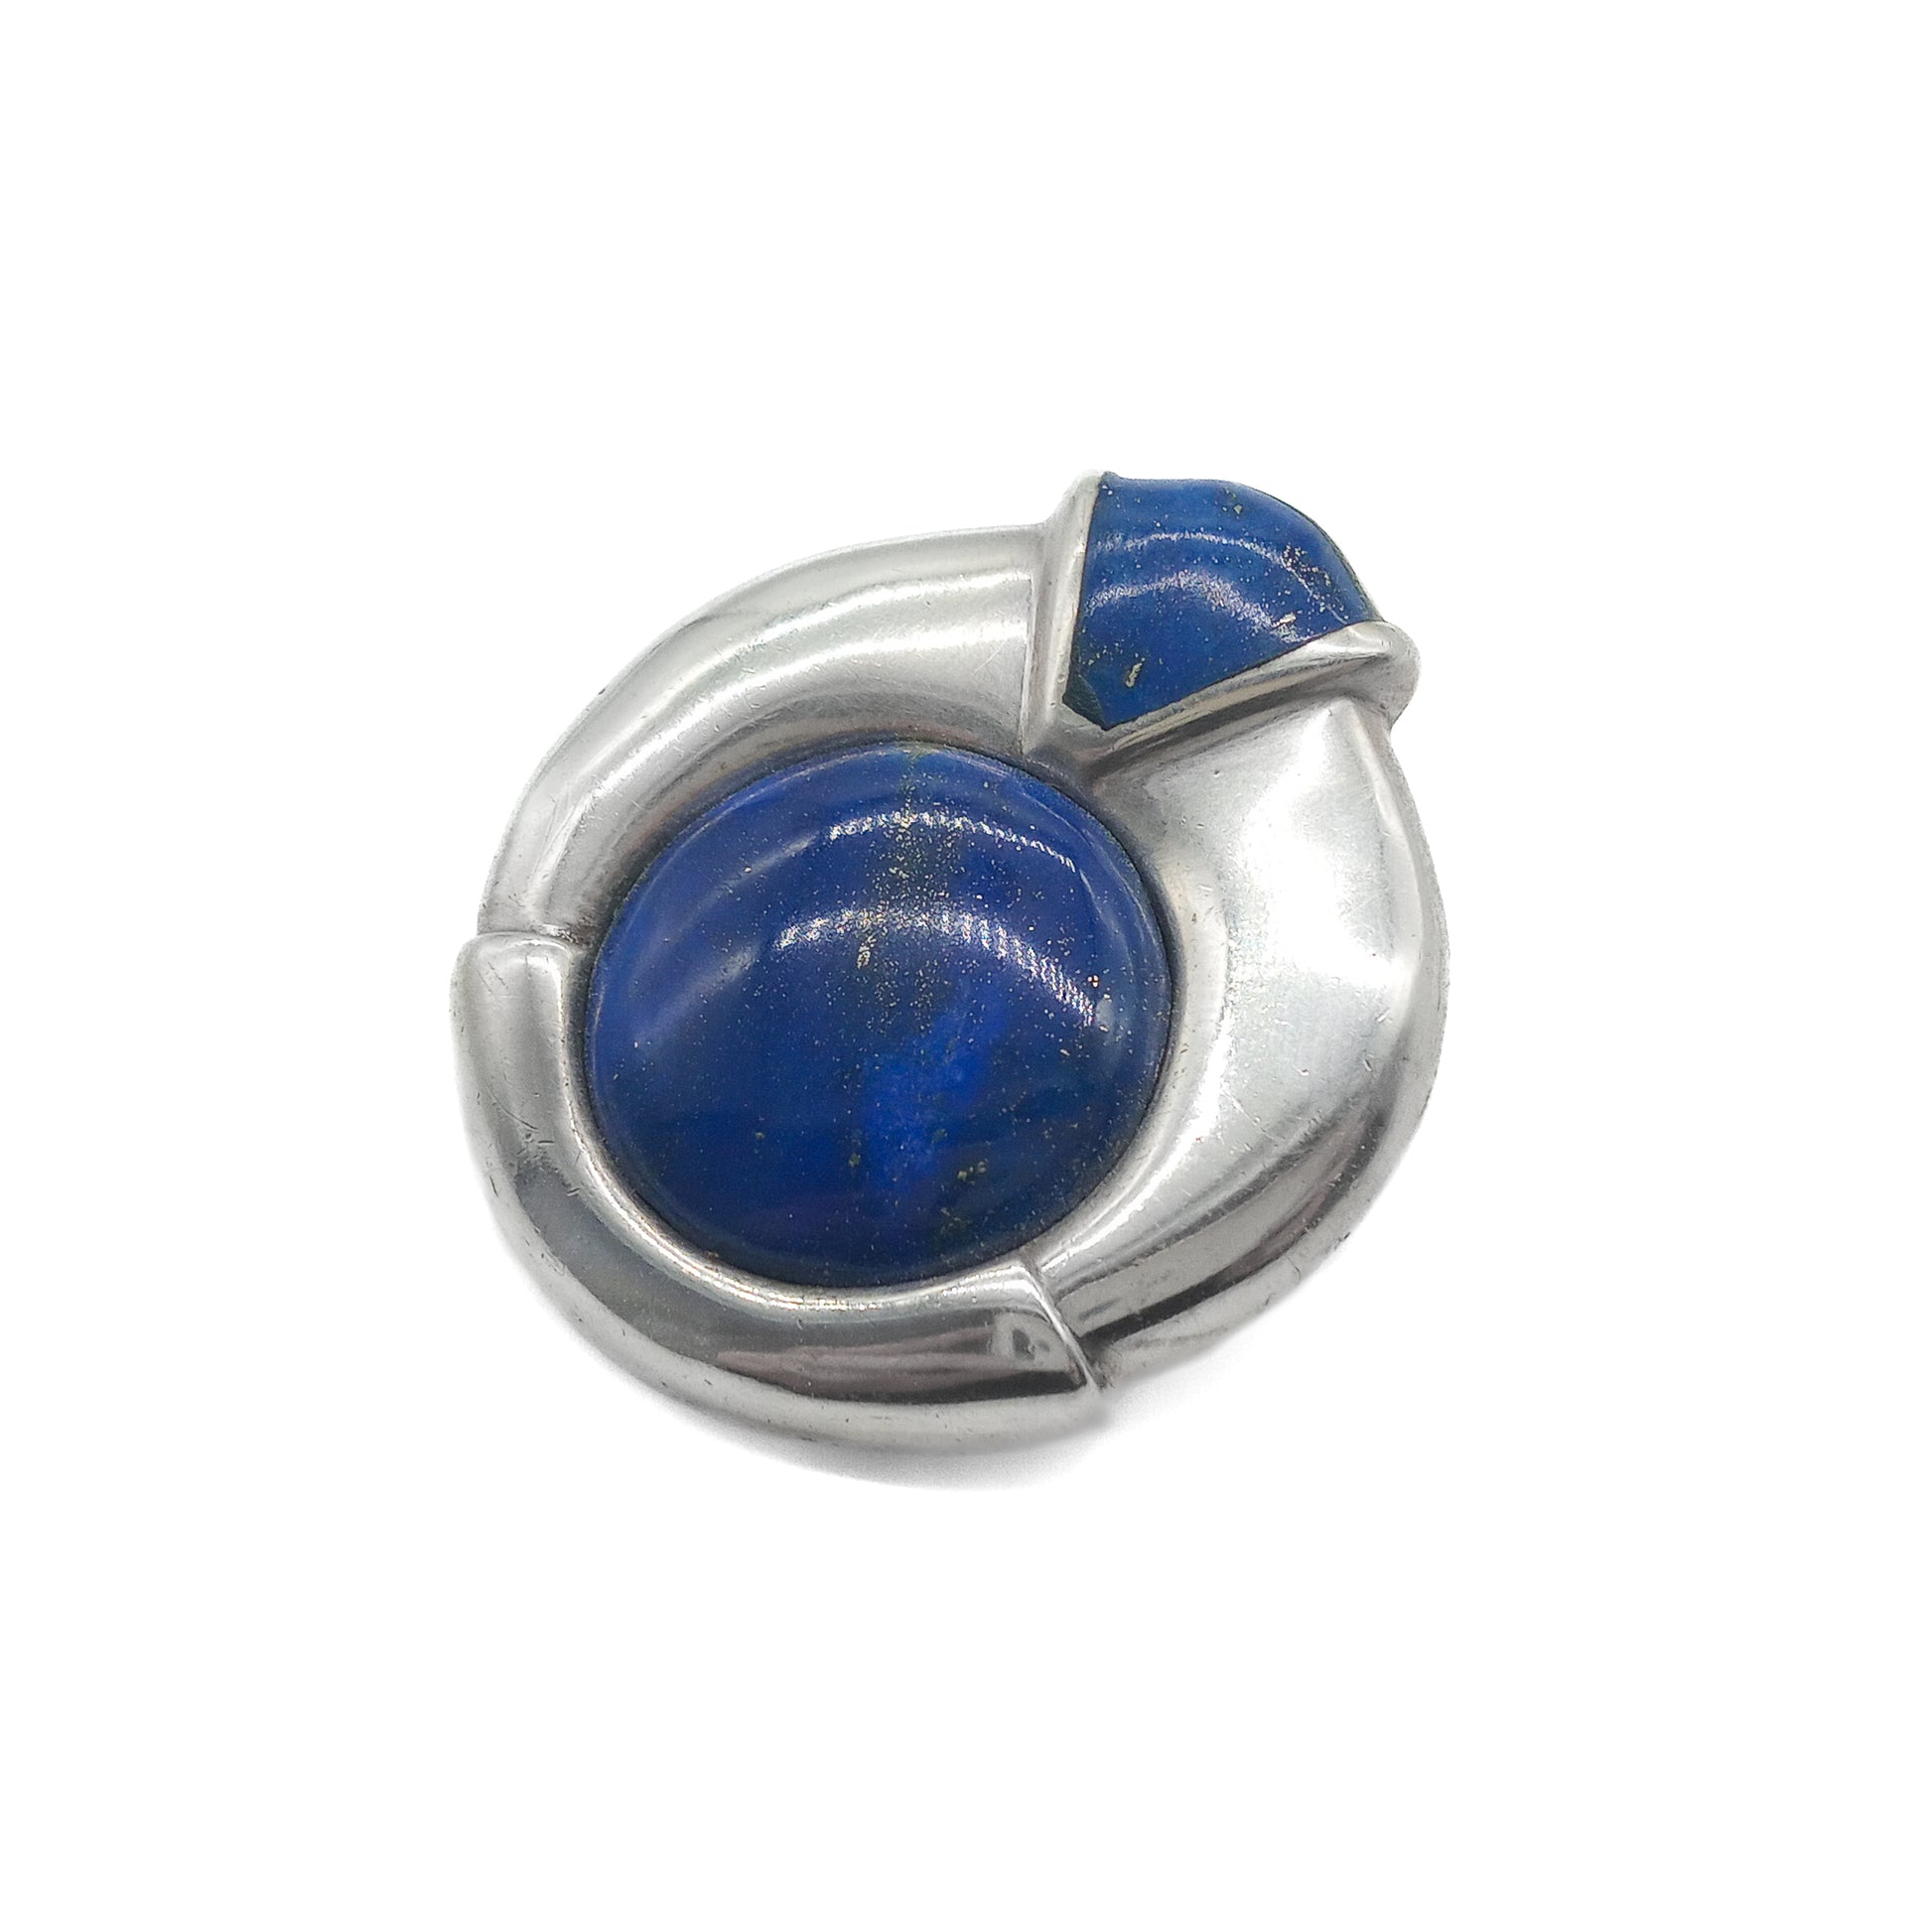 Stylish Mid-Century sterling silver clip-pendant set with lapis lazuli stones.